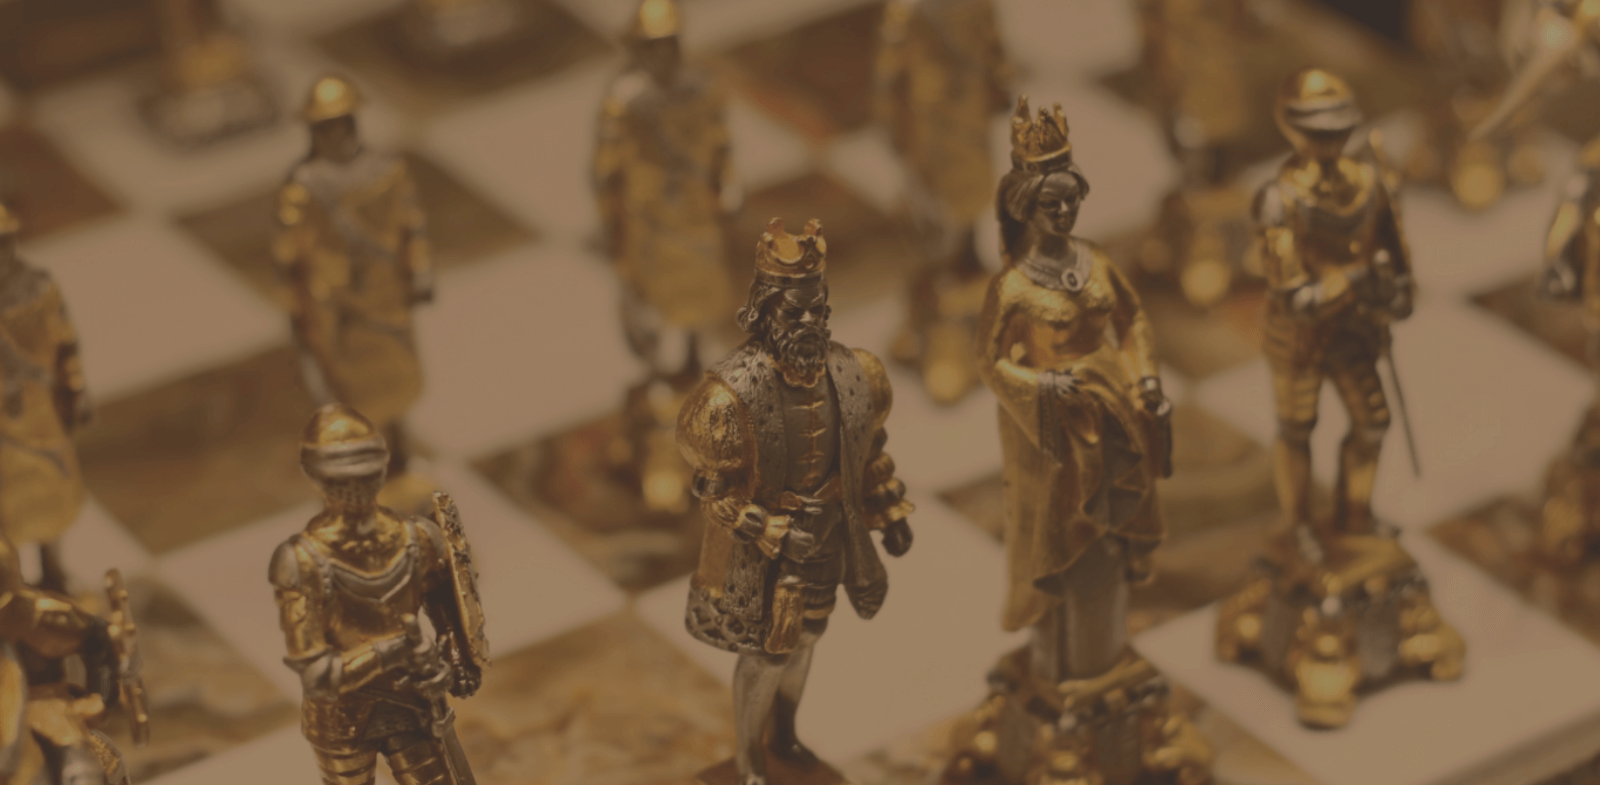 golden chess pieces